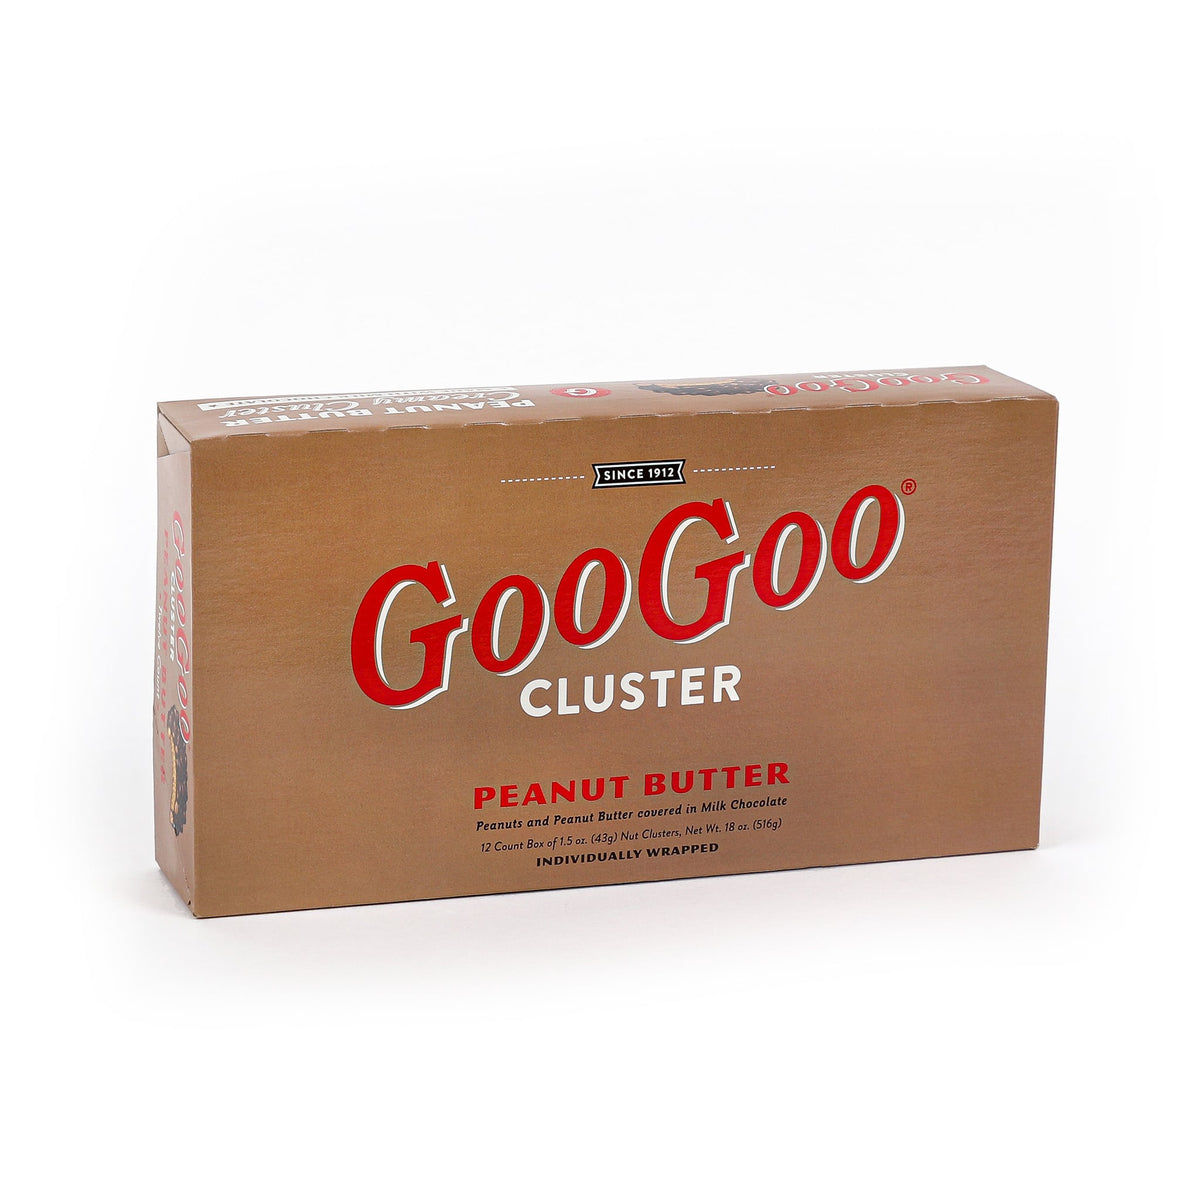 Peanut Butter Goo Goo Cluster - 12 Count Box